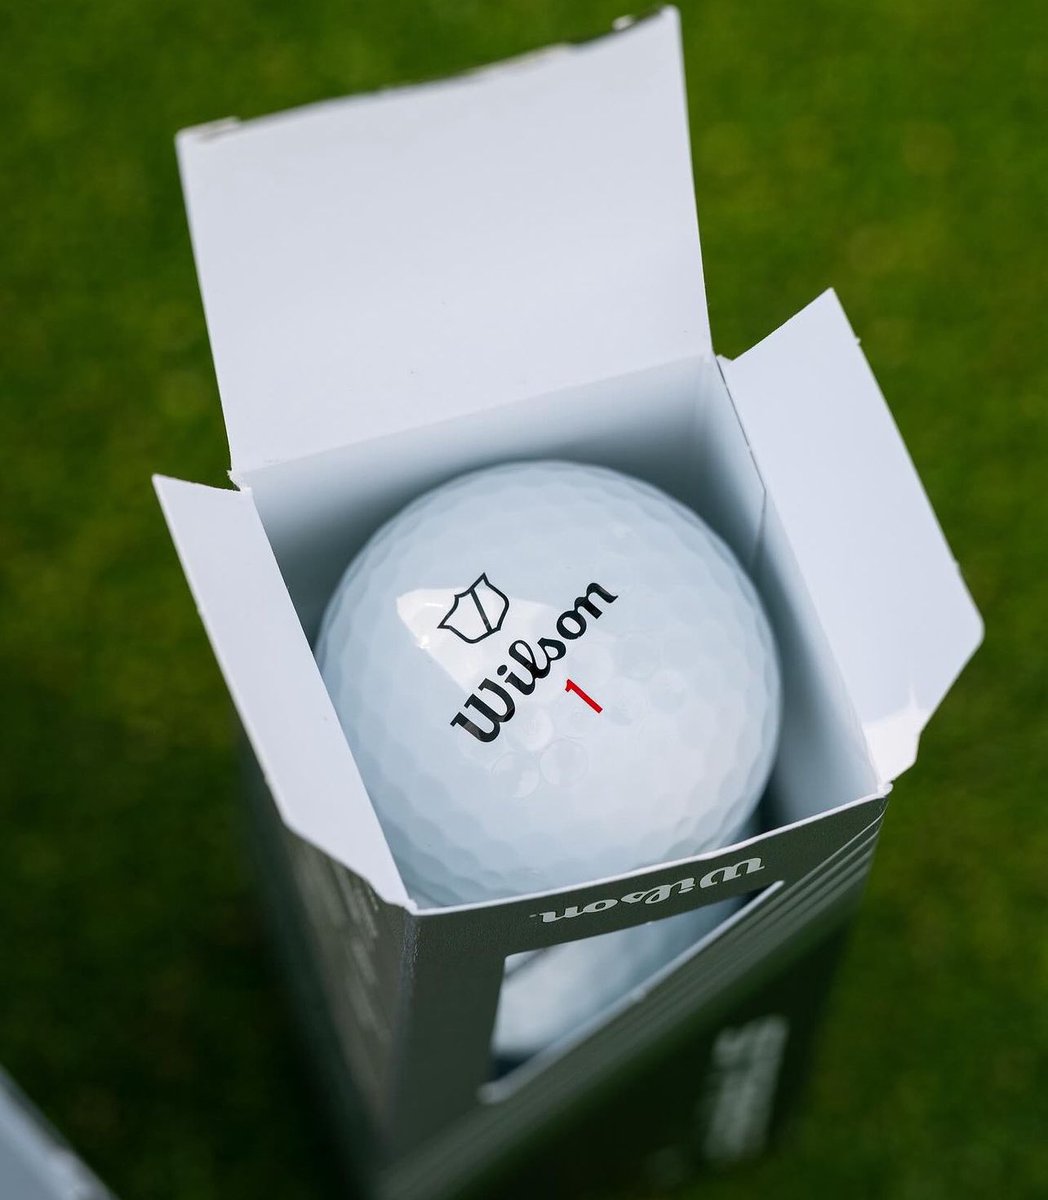 Wilson Staff Model X golf ball…… A Tour proven ball for a player who’s wanting a firm & fast ball. #wilson #staffmodelx @WilsonGolfEU